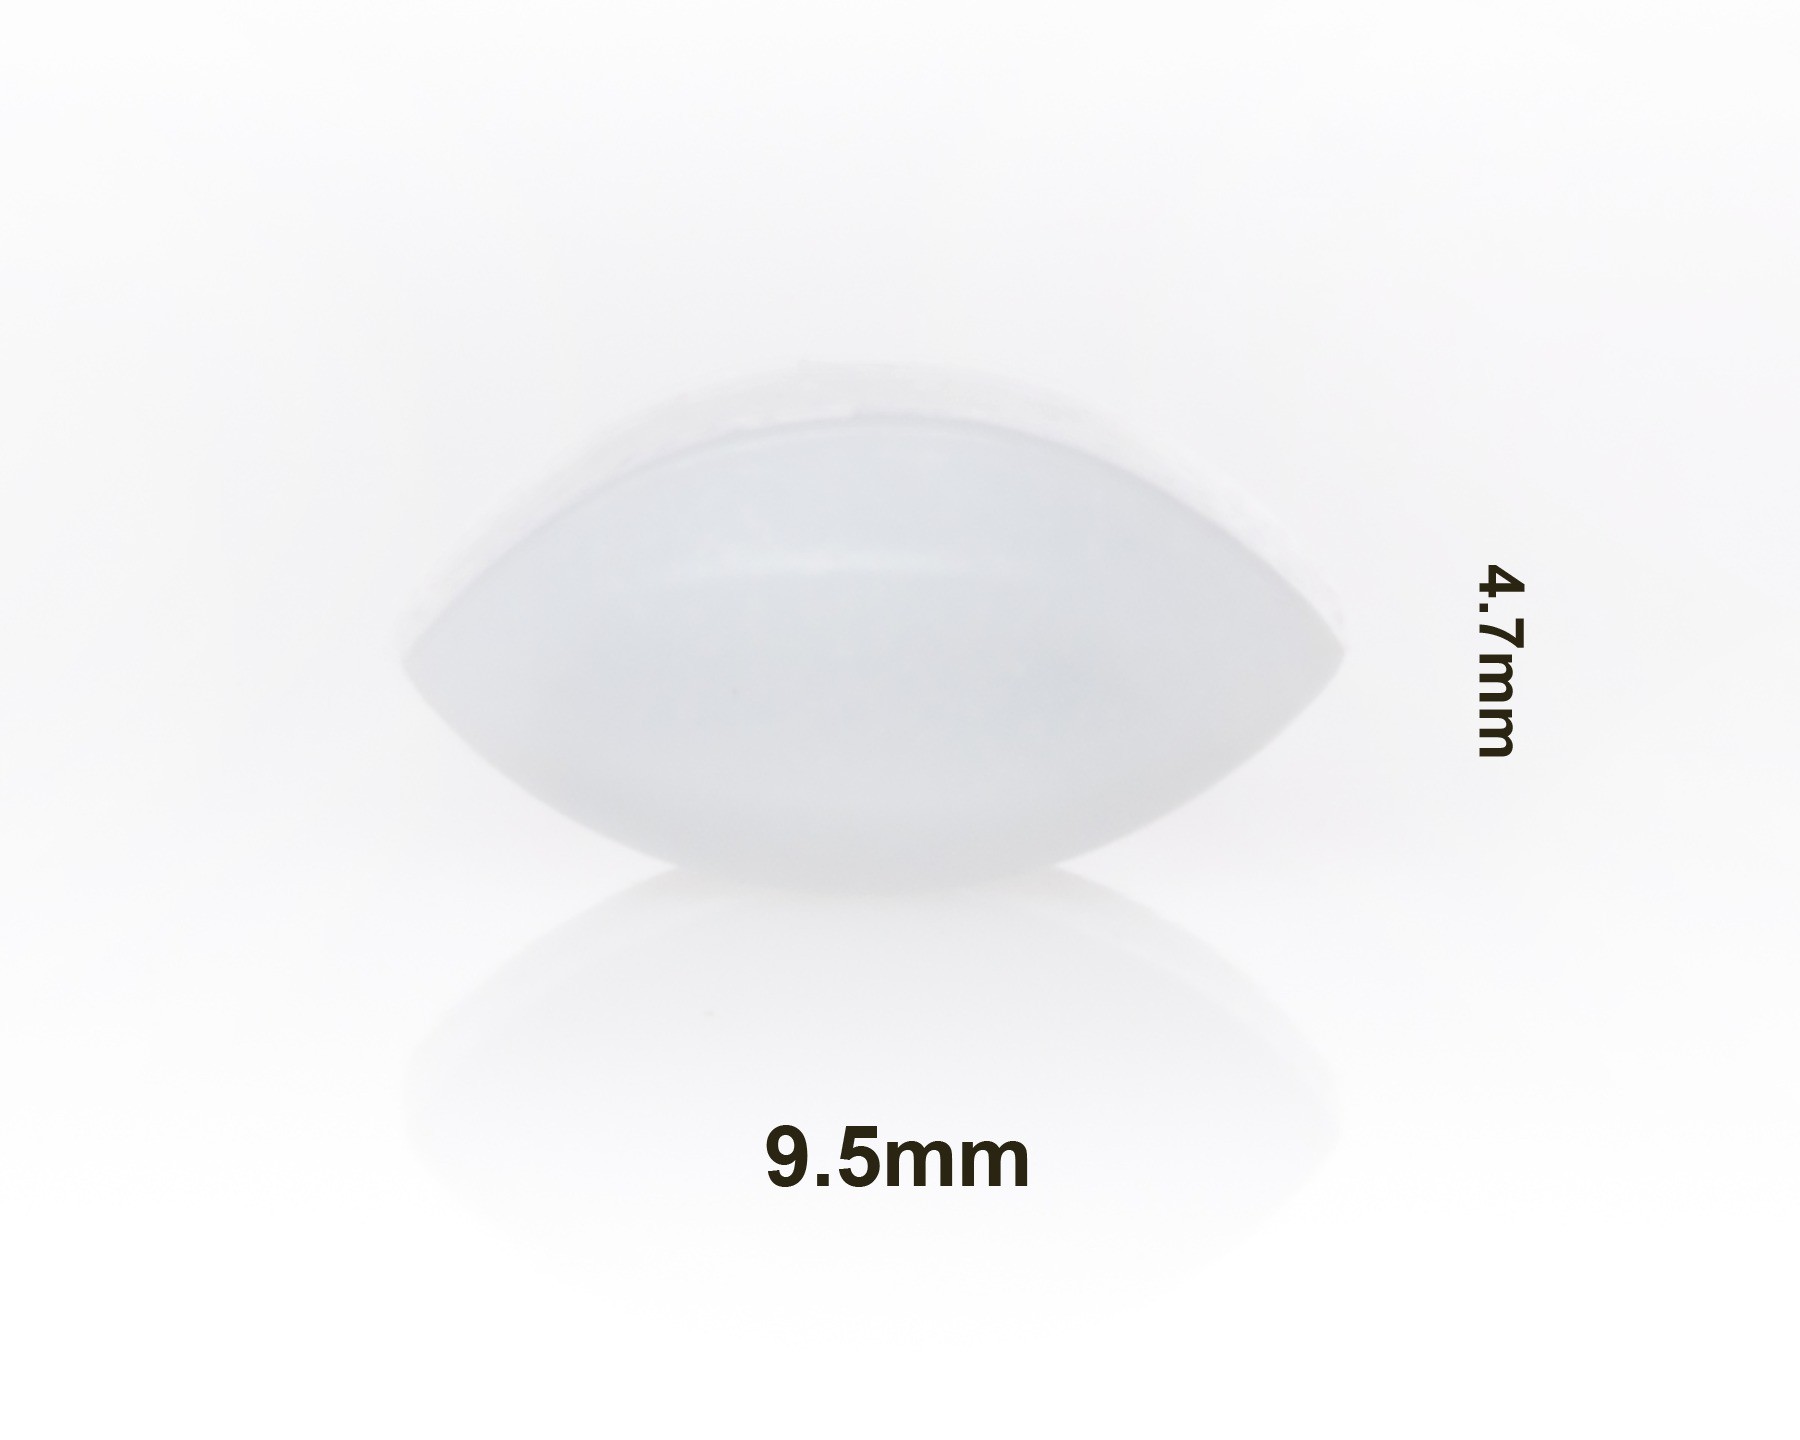 SP Bel-Art Spinbar Teflon Elliptical (Egg-Shaped) Magnetic Stirring Bar; 9.5 x 4.7mm, White